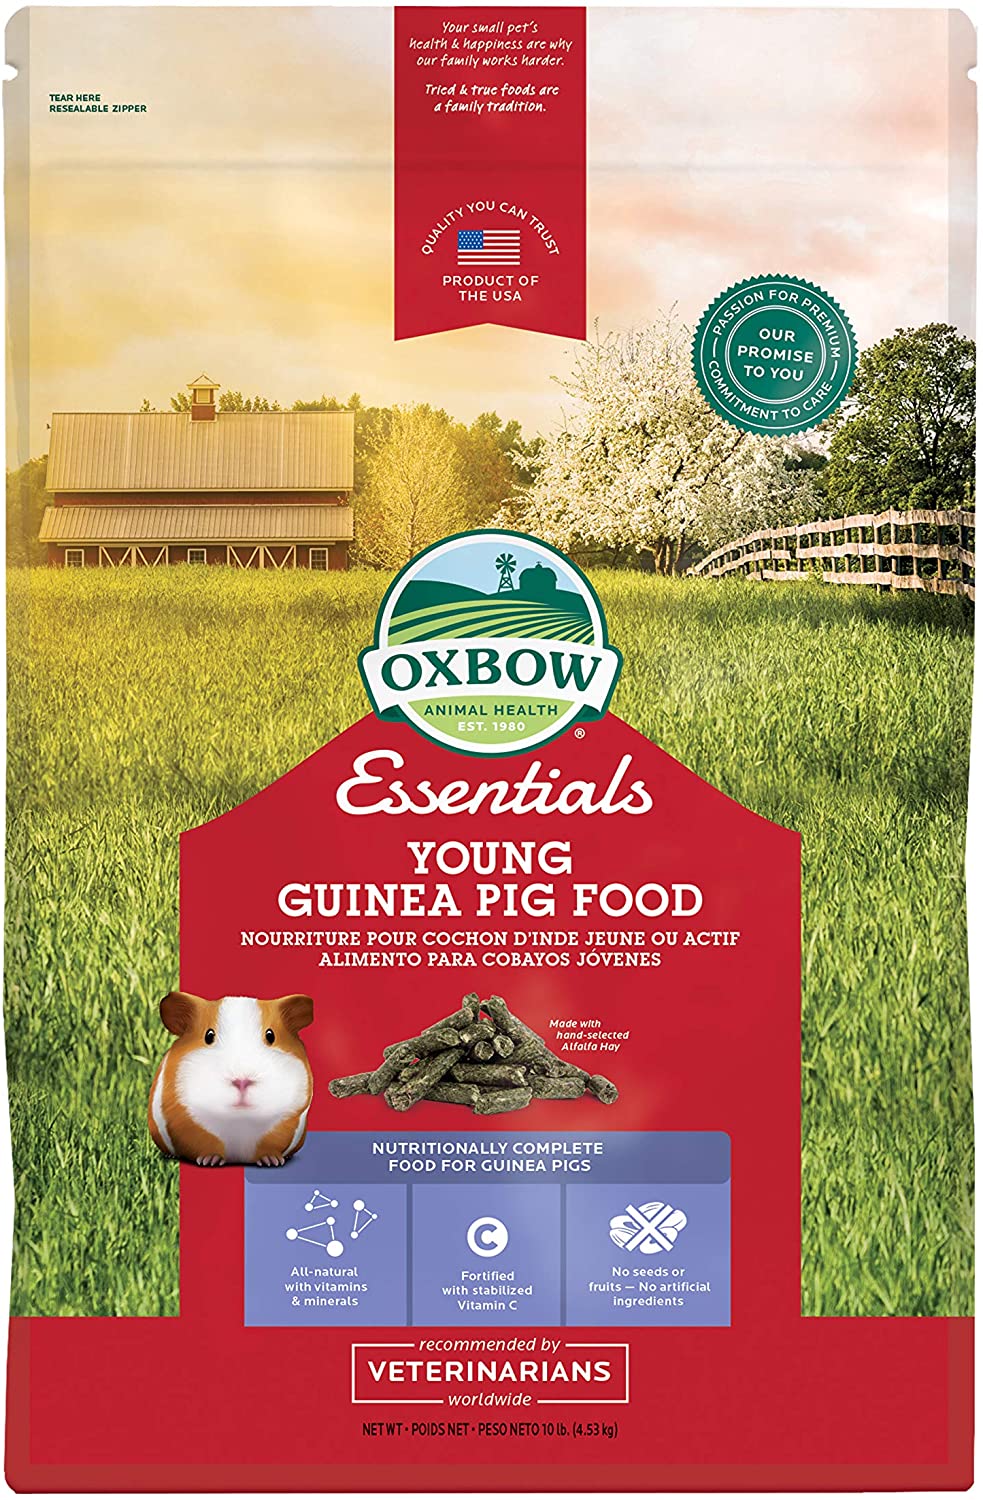 Oxbow Essentials Young Guinea Pig